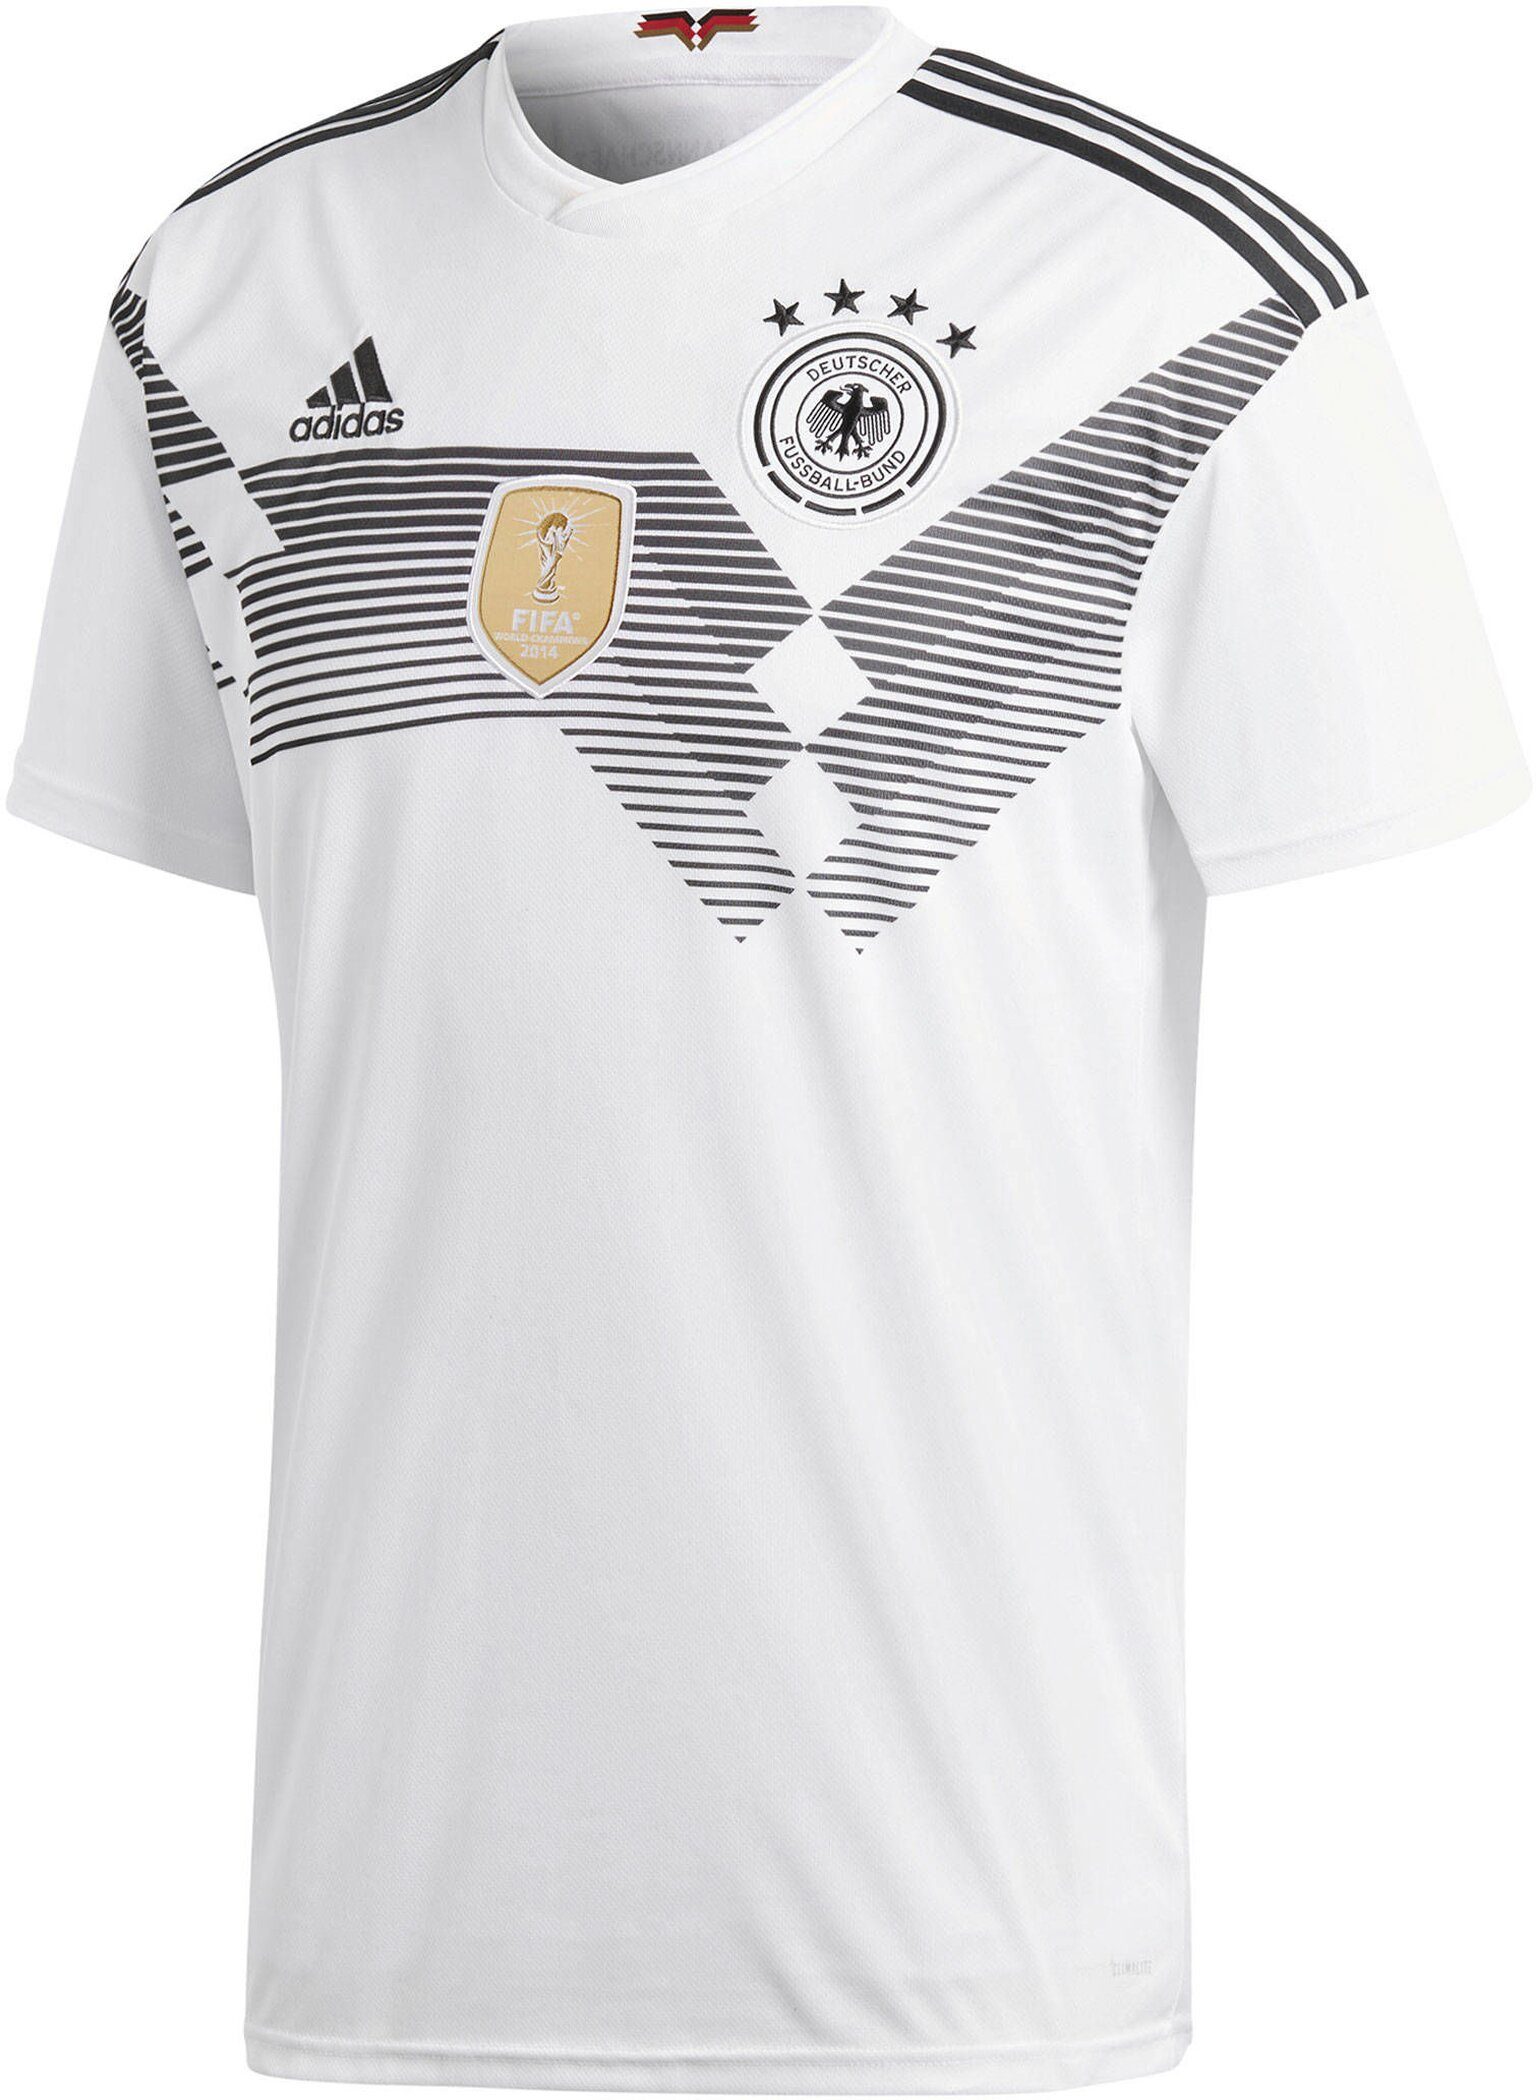 adidas JSY H DFB Sportswear WHITE/BLACK Kurzarmshirt